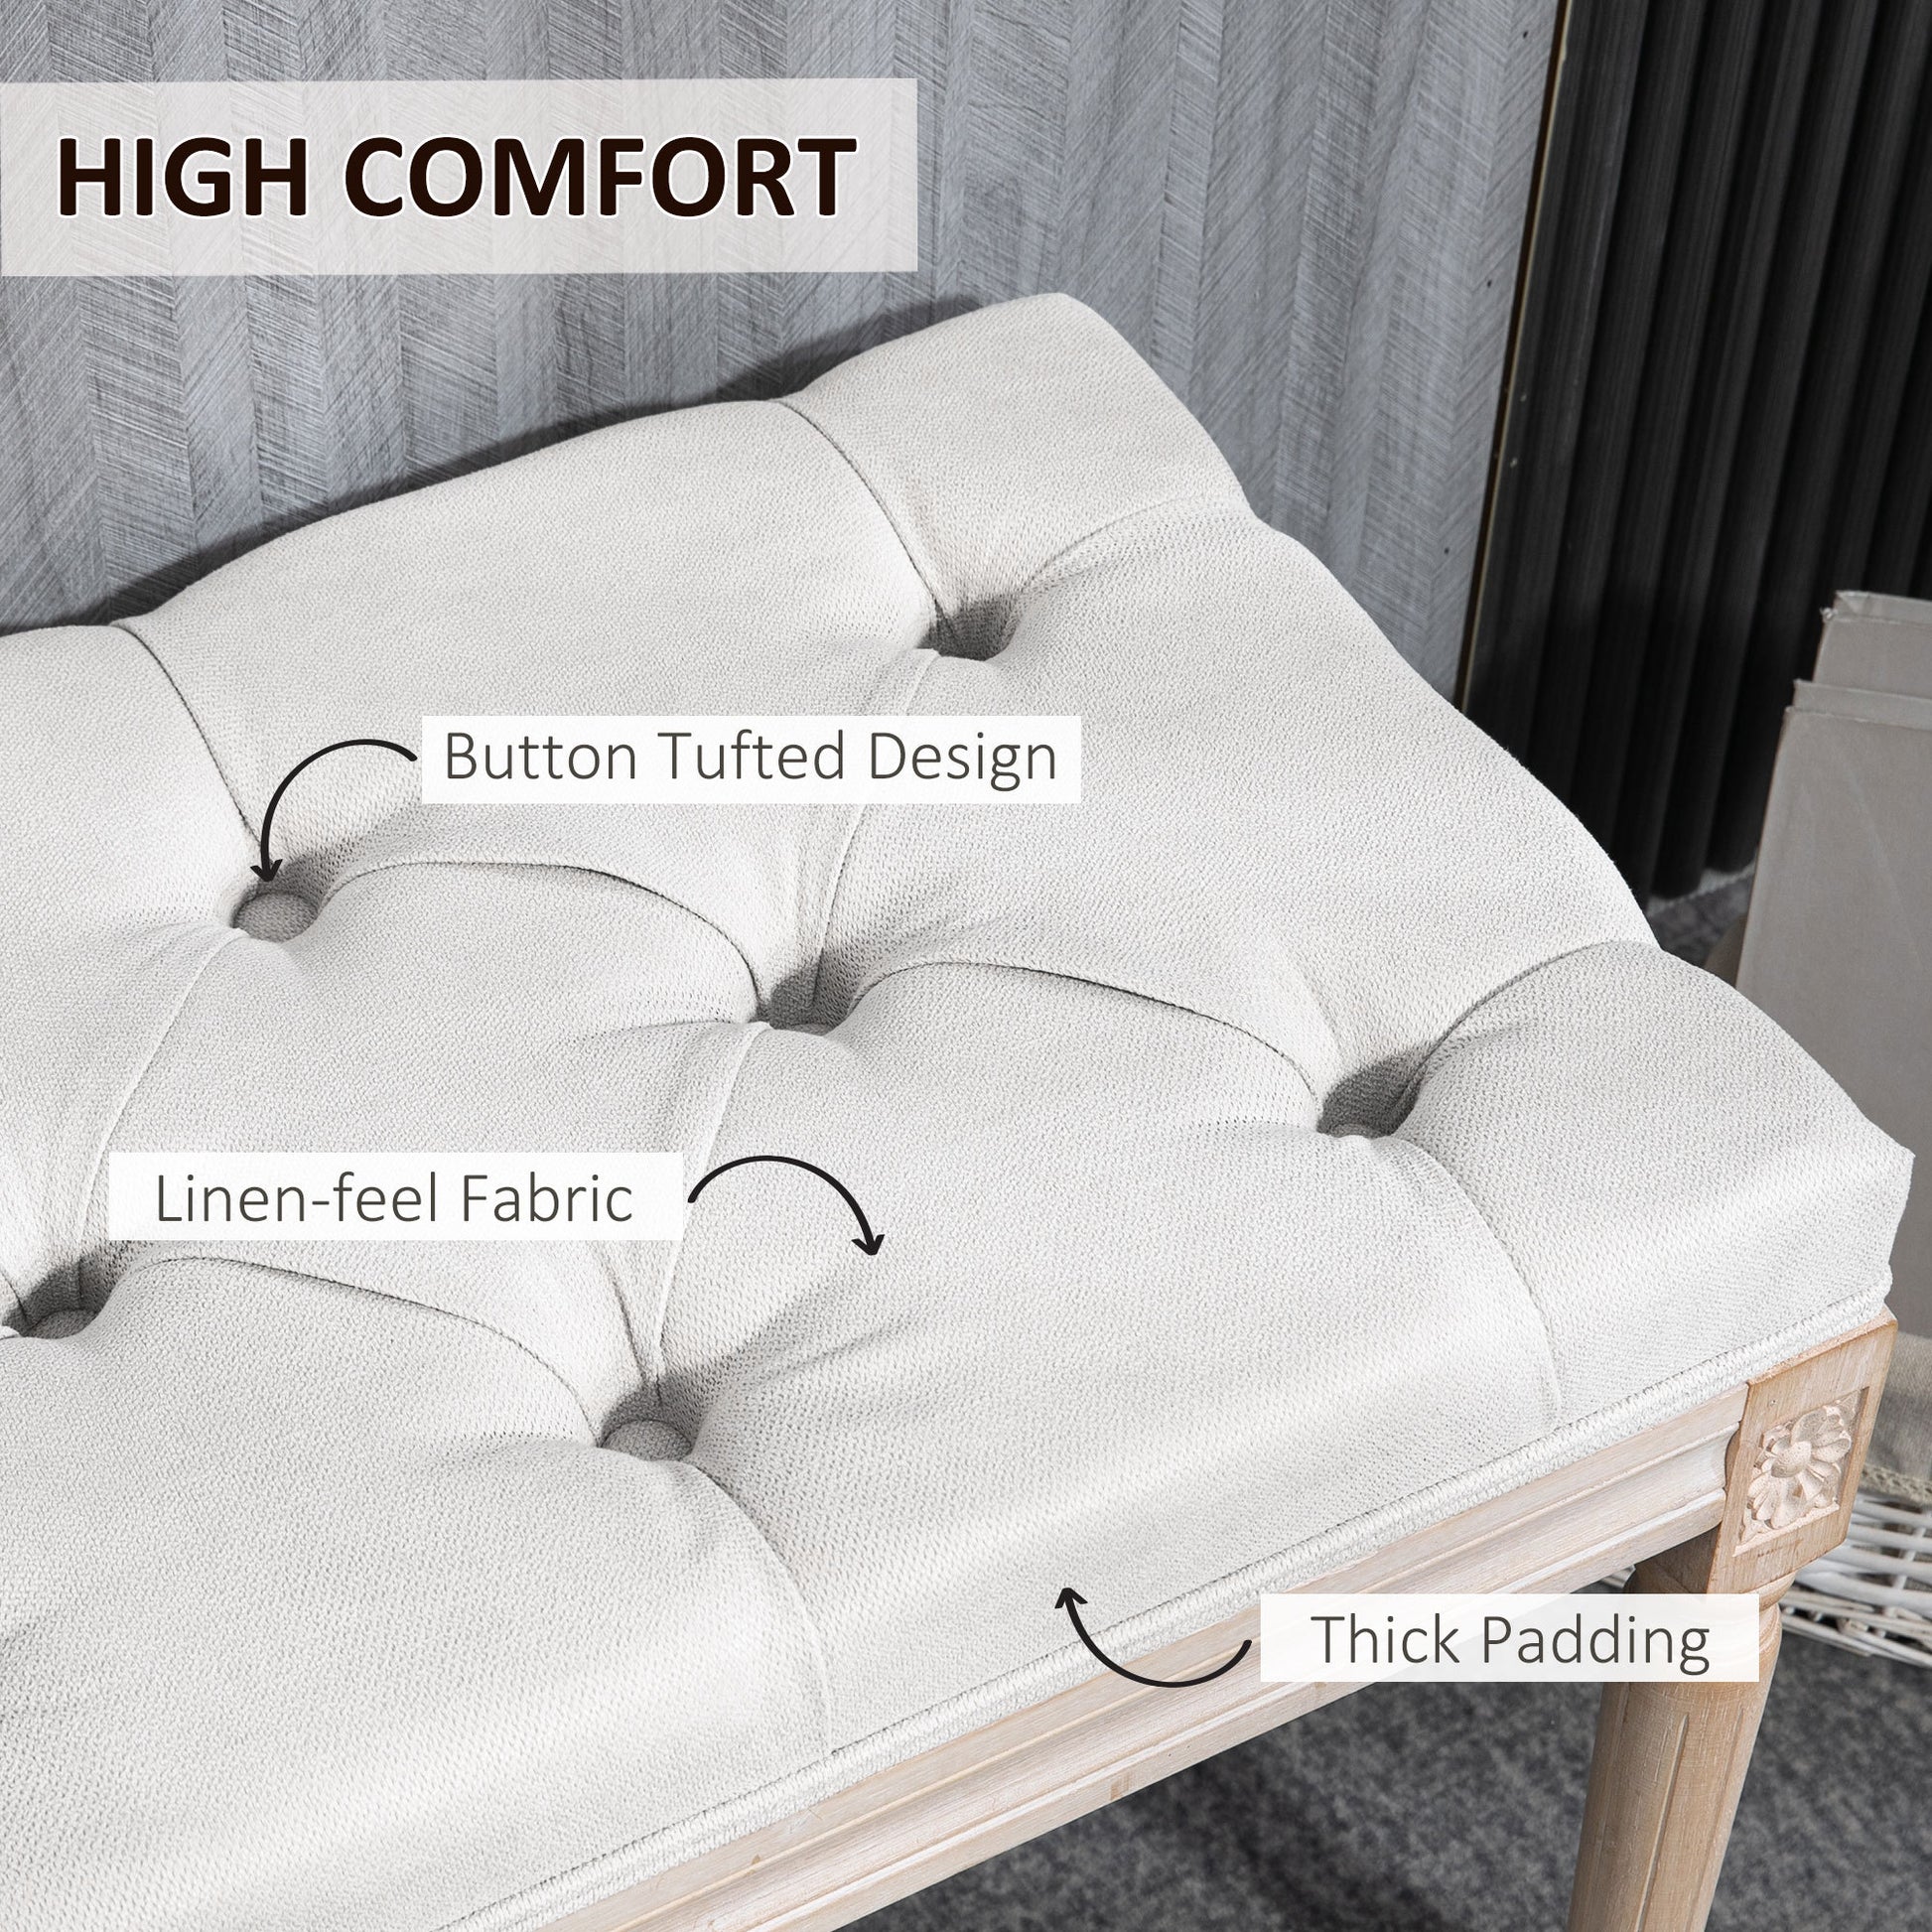 HOMCOM 46" End of Bed Bench, Upholstered Bedroom cream white-polyester